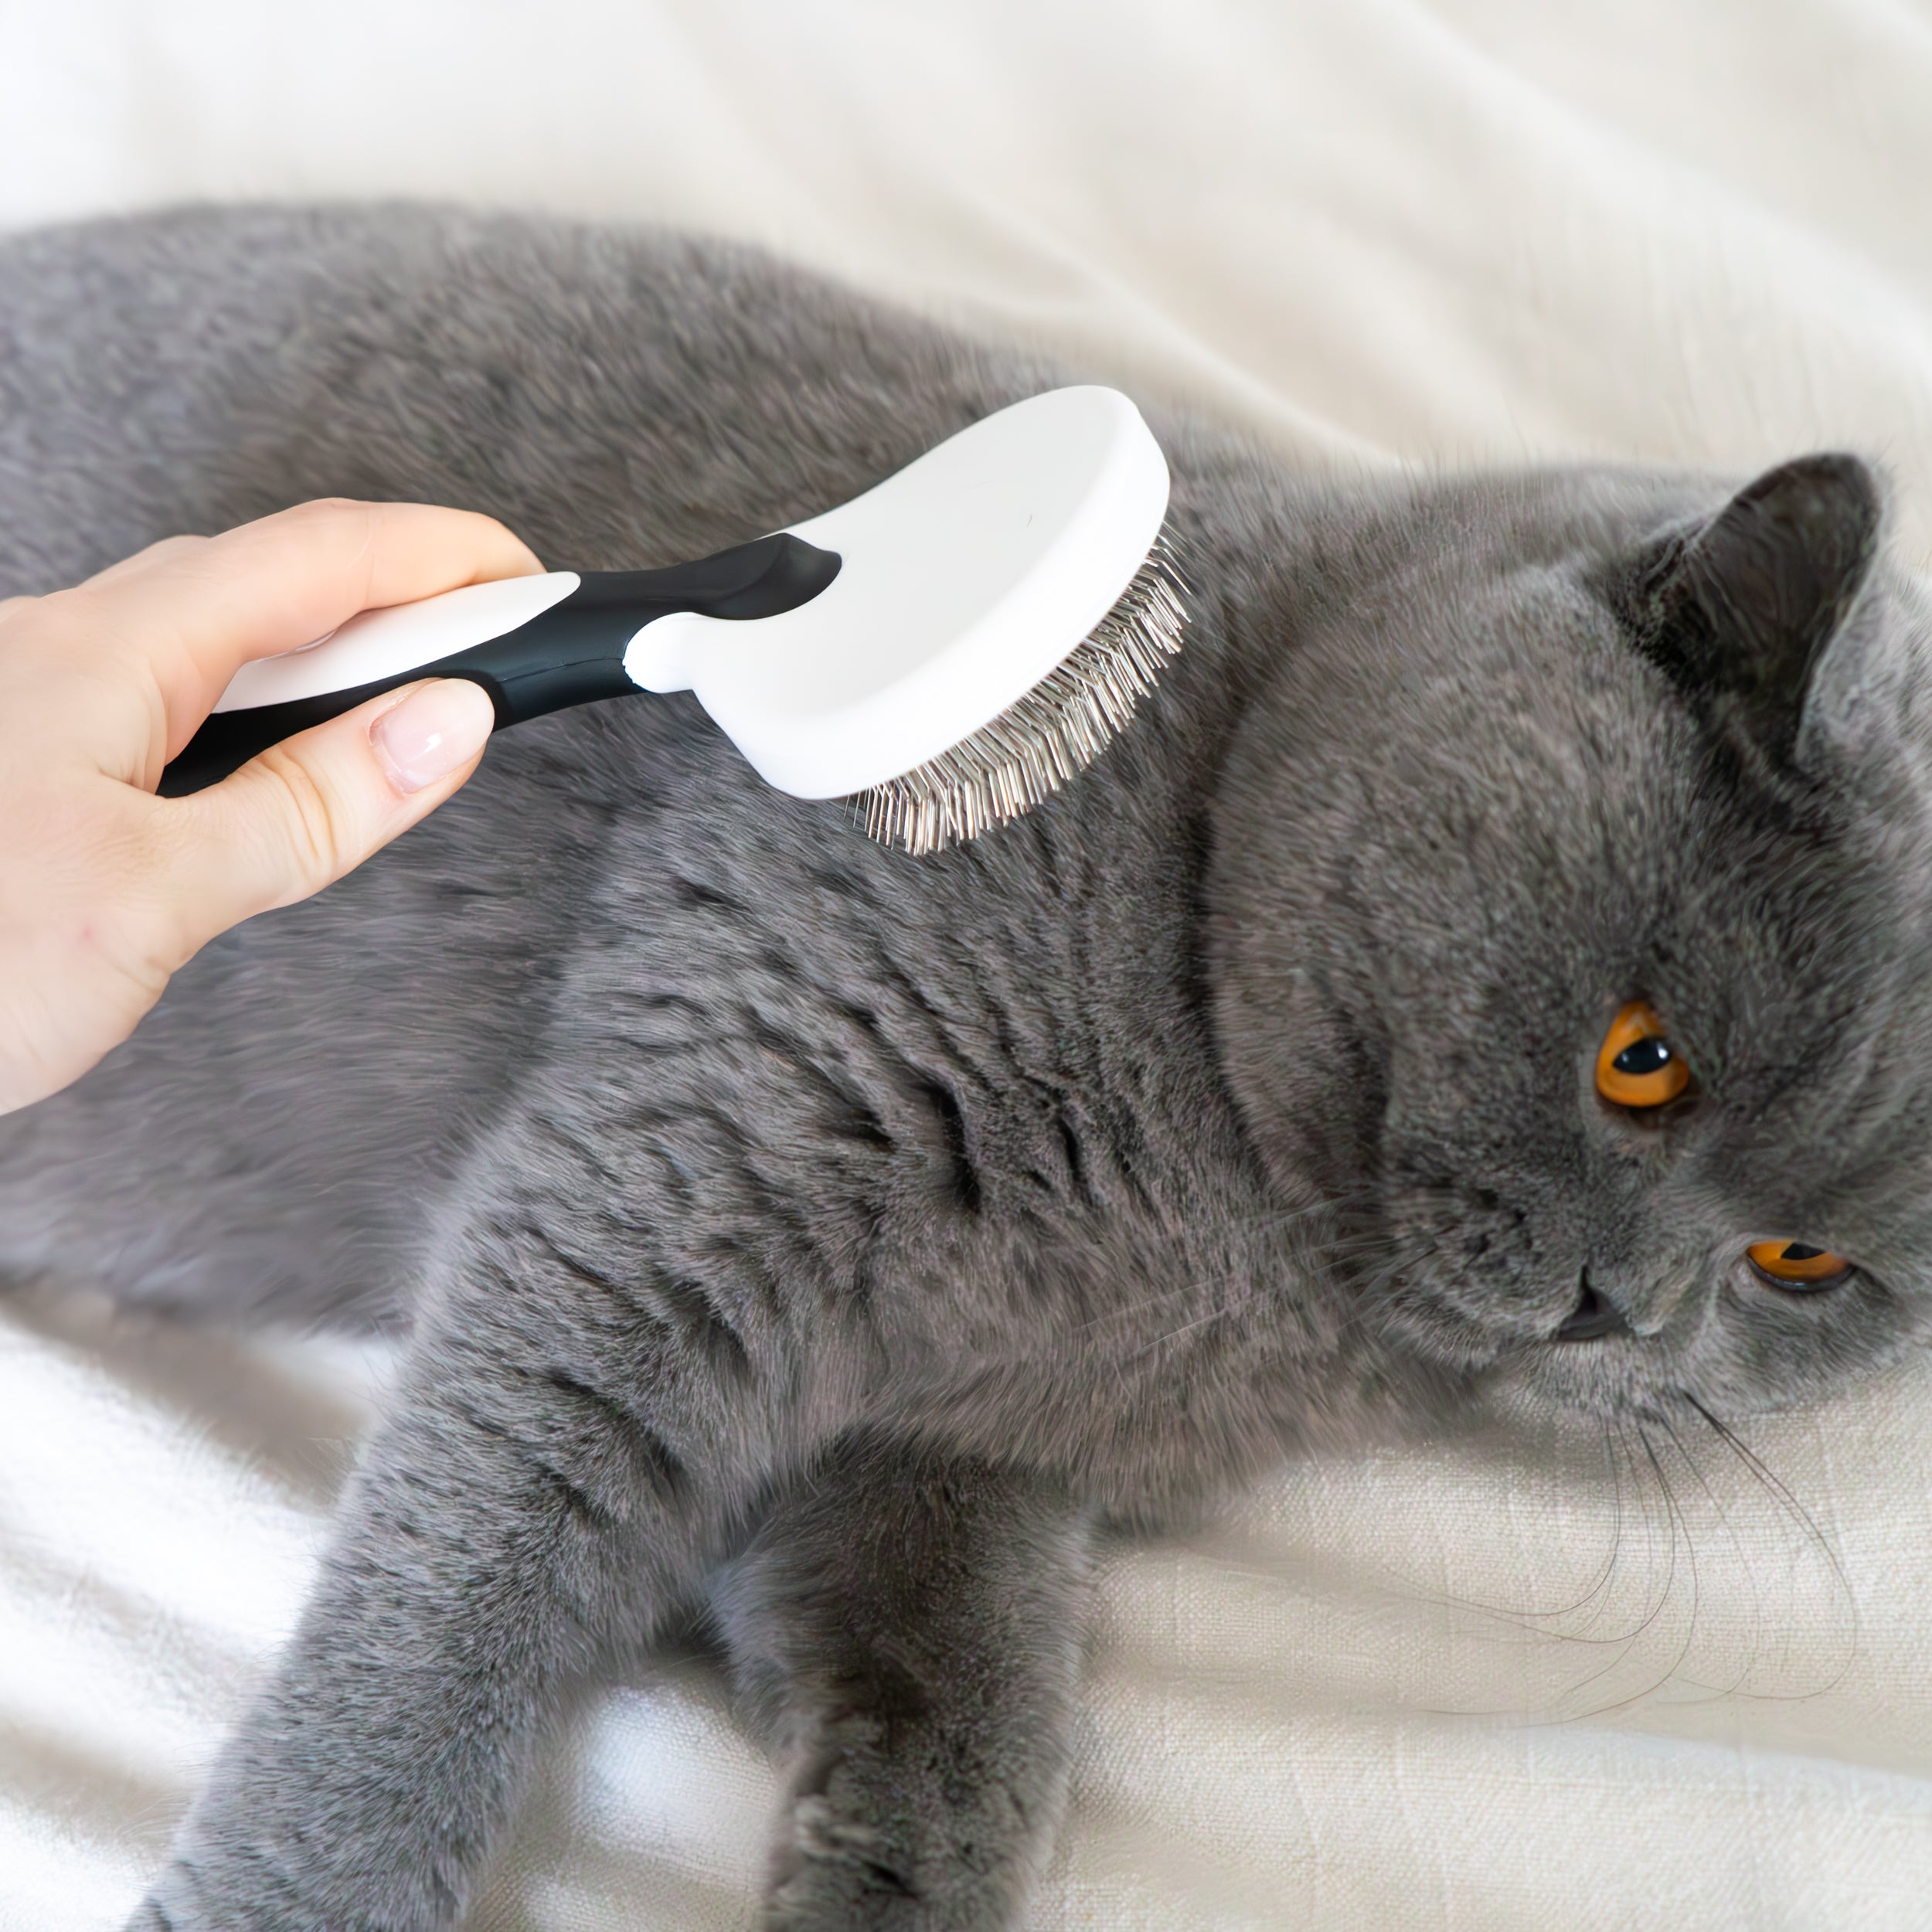 Pet Slicker Brush